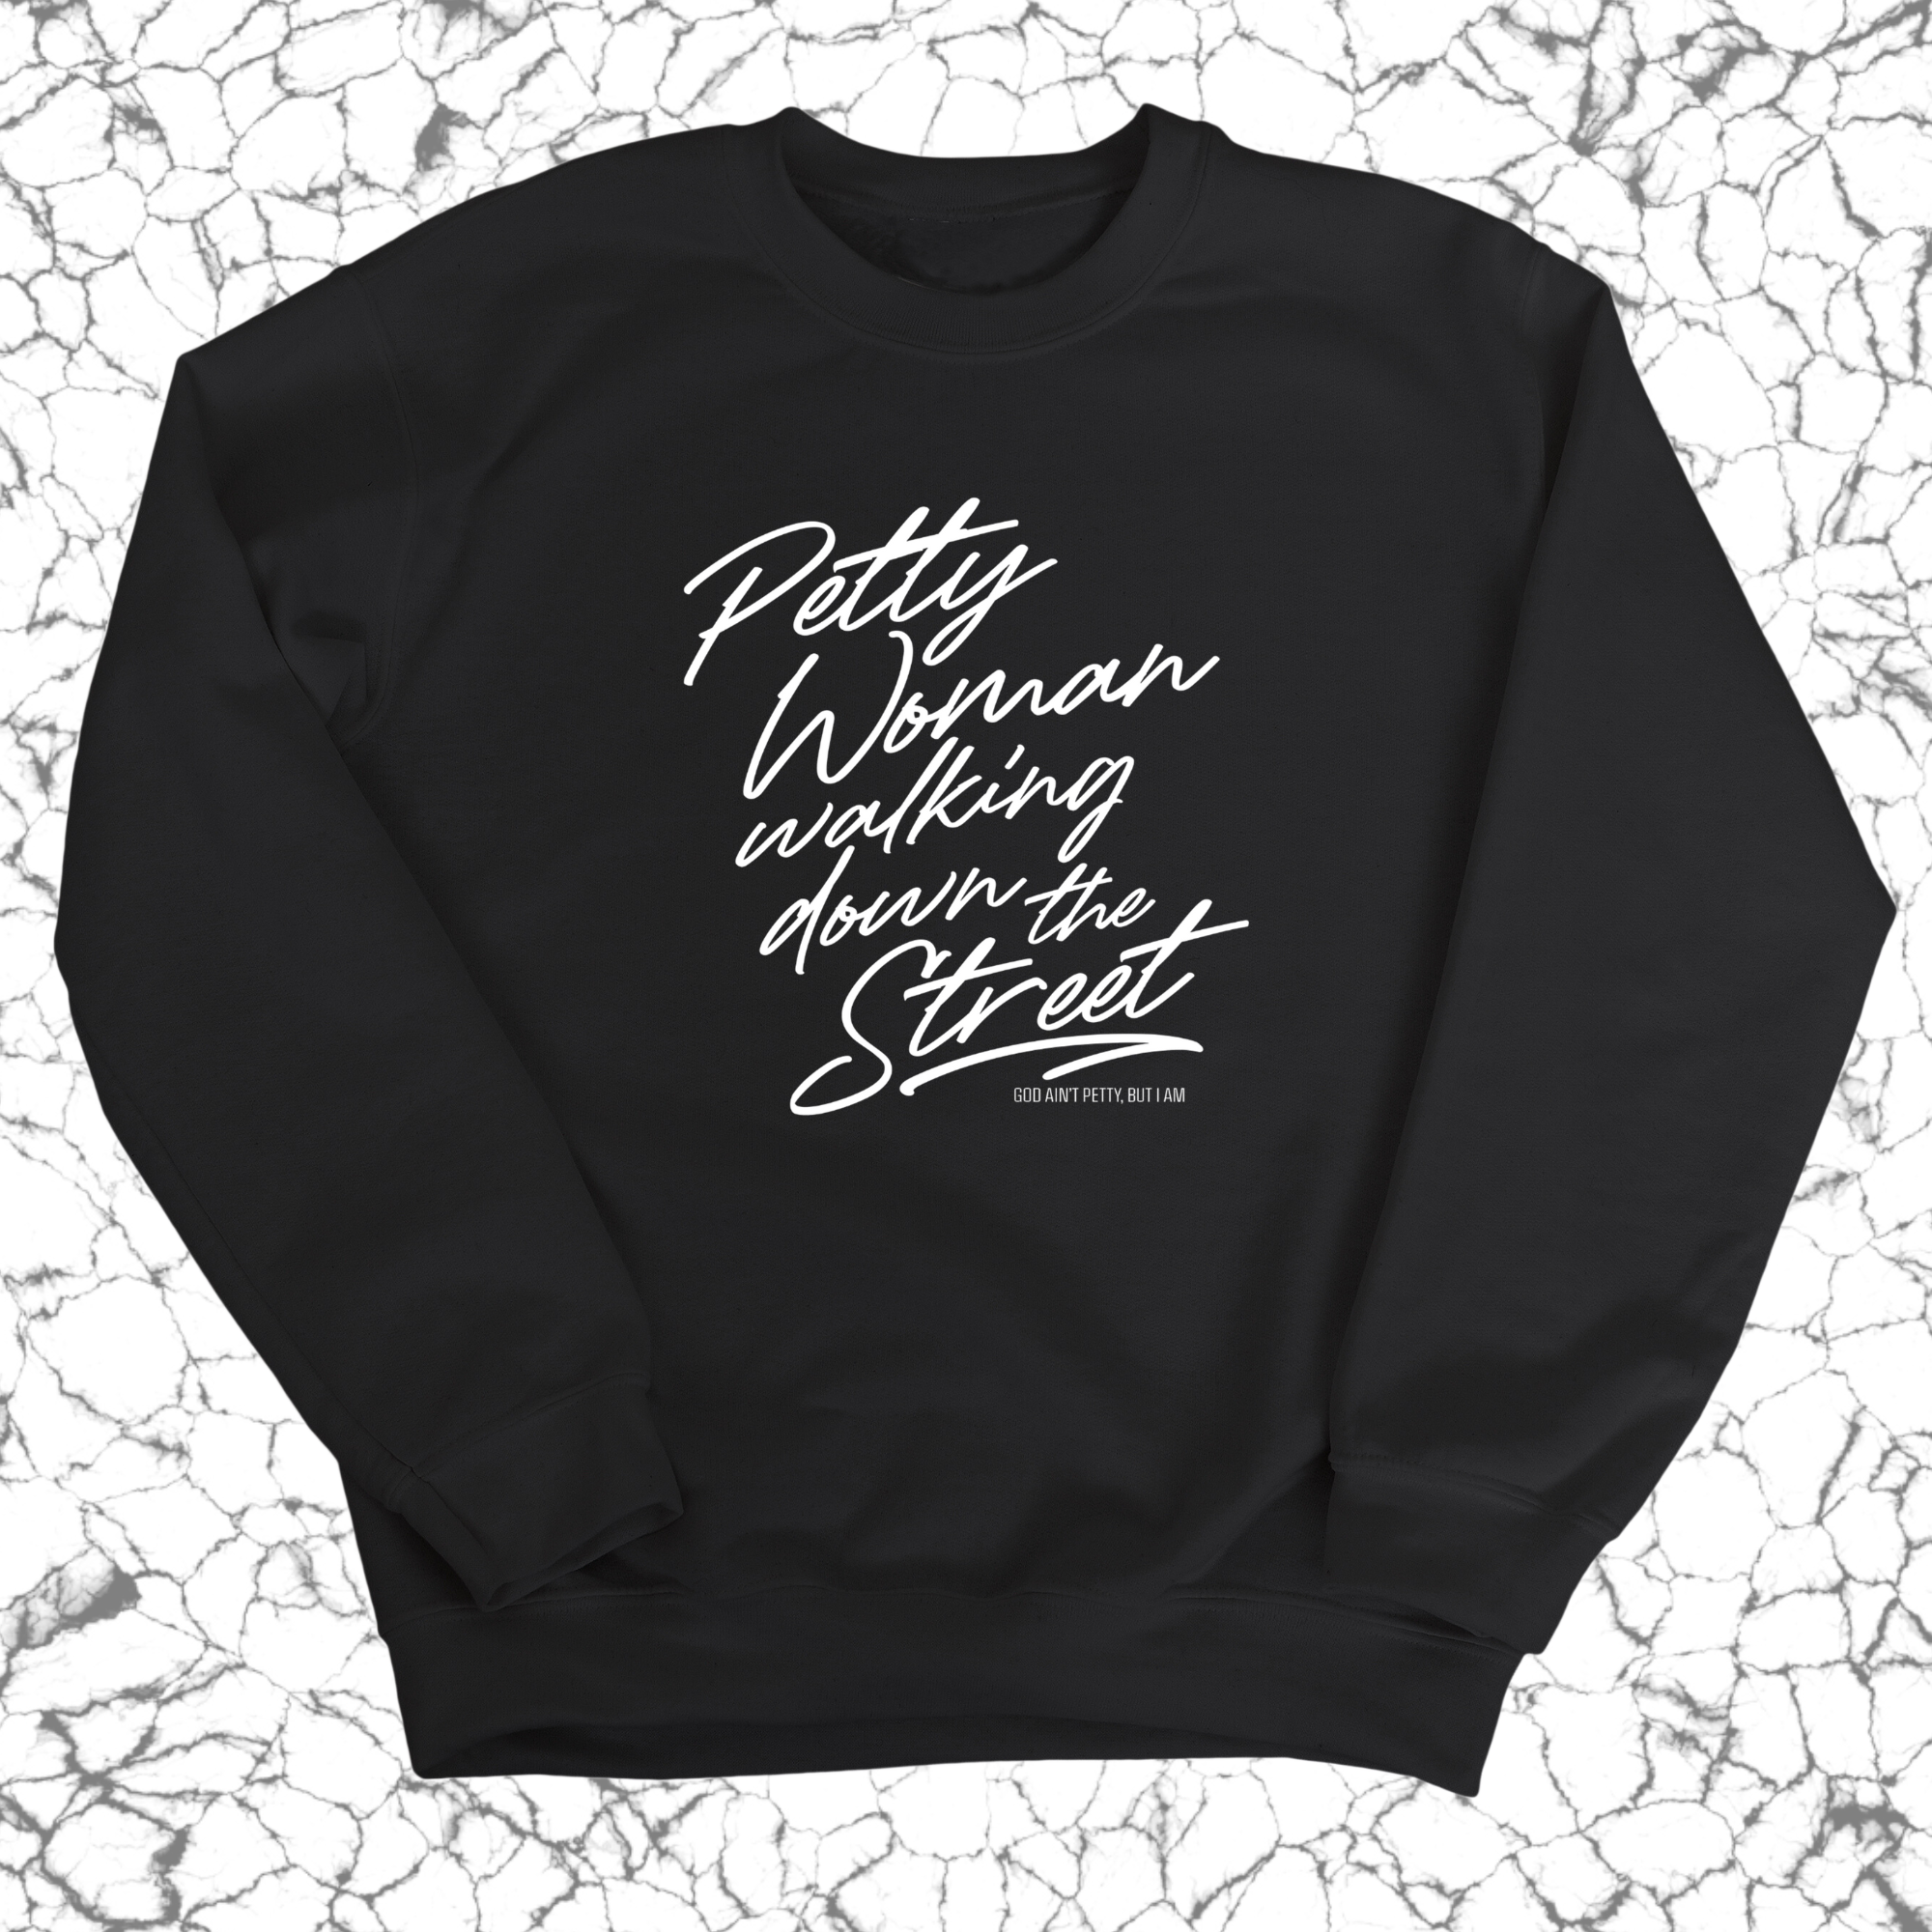 Petty Woman Walking Down the Street Unisex Sweatshirt-Sweatshirt-The Original God Ain't Petty But I Am